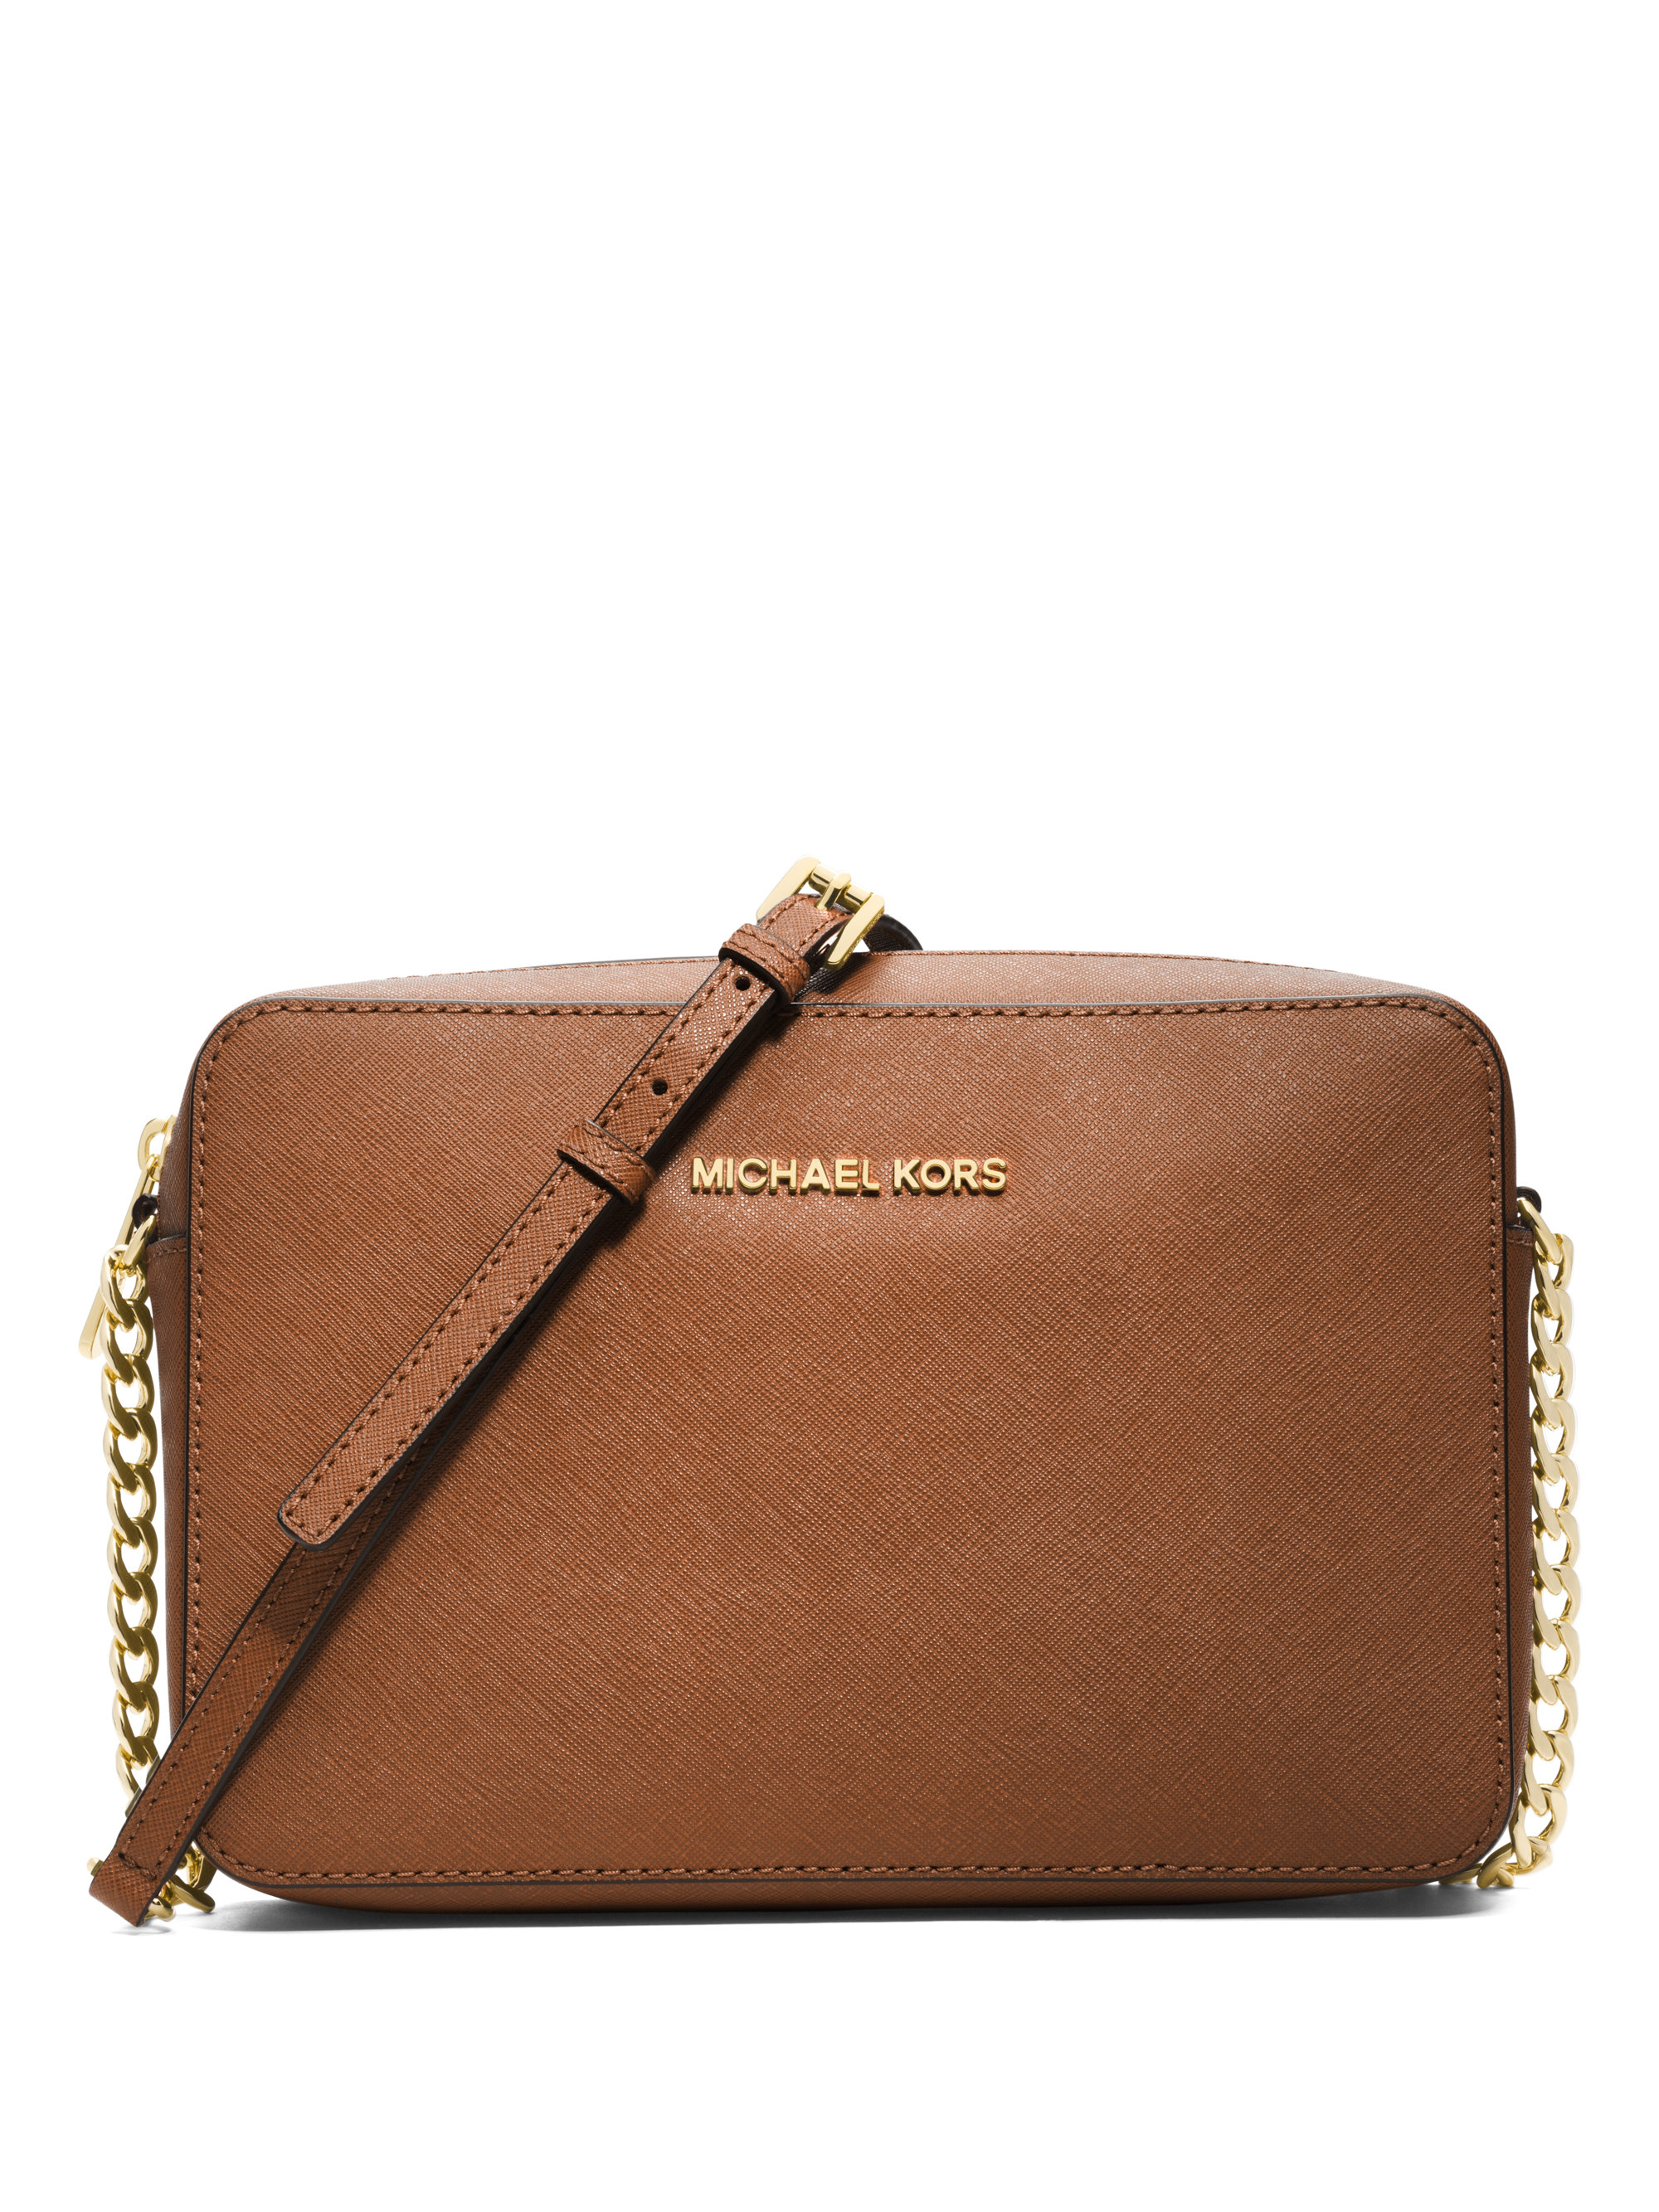 Michael Kors Crossbody Large Handbags For Sale :: Keweenaw Bay Indian